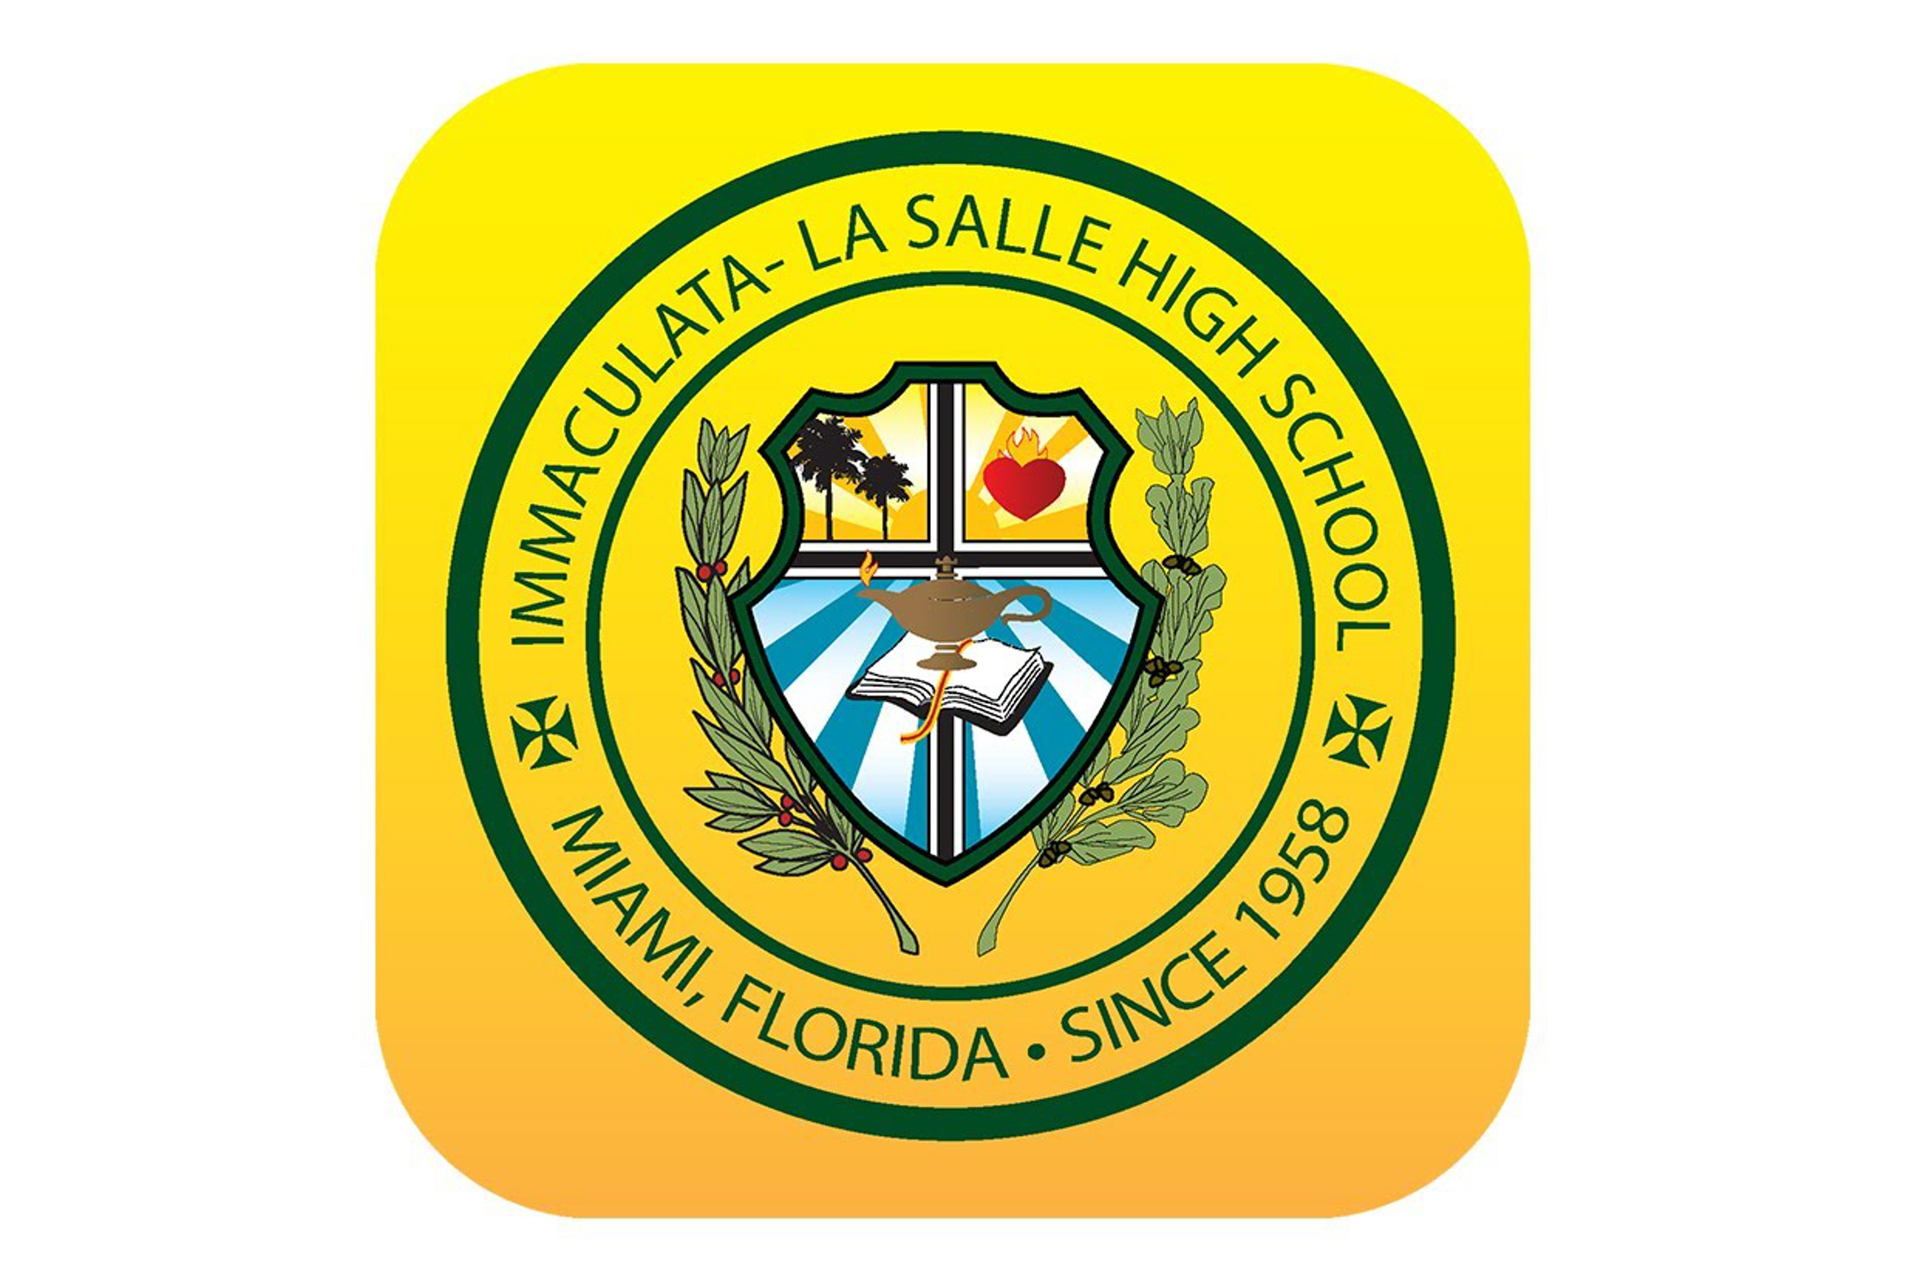 Immaculata La Salle 2019 High School Graduation logo